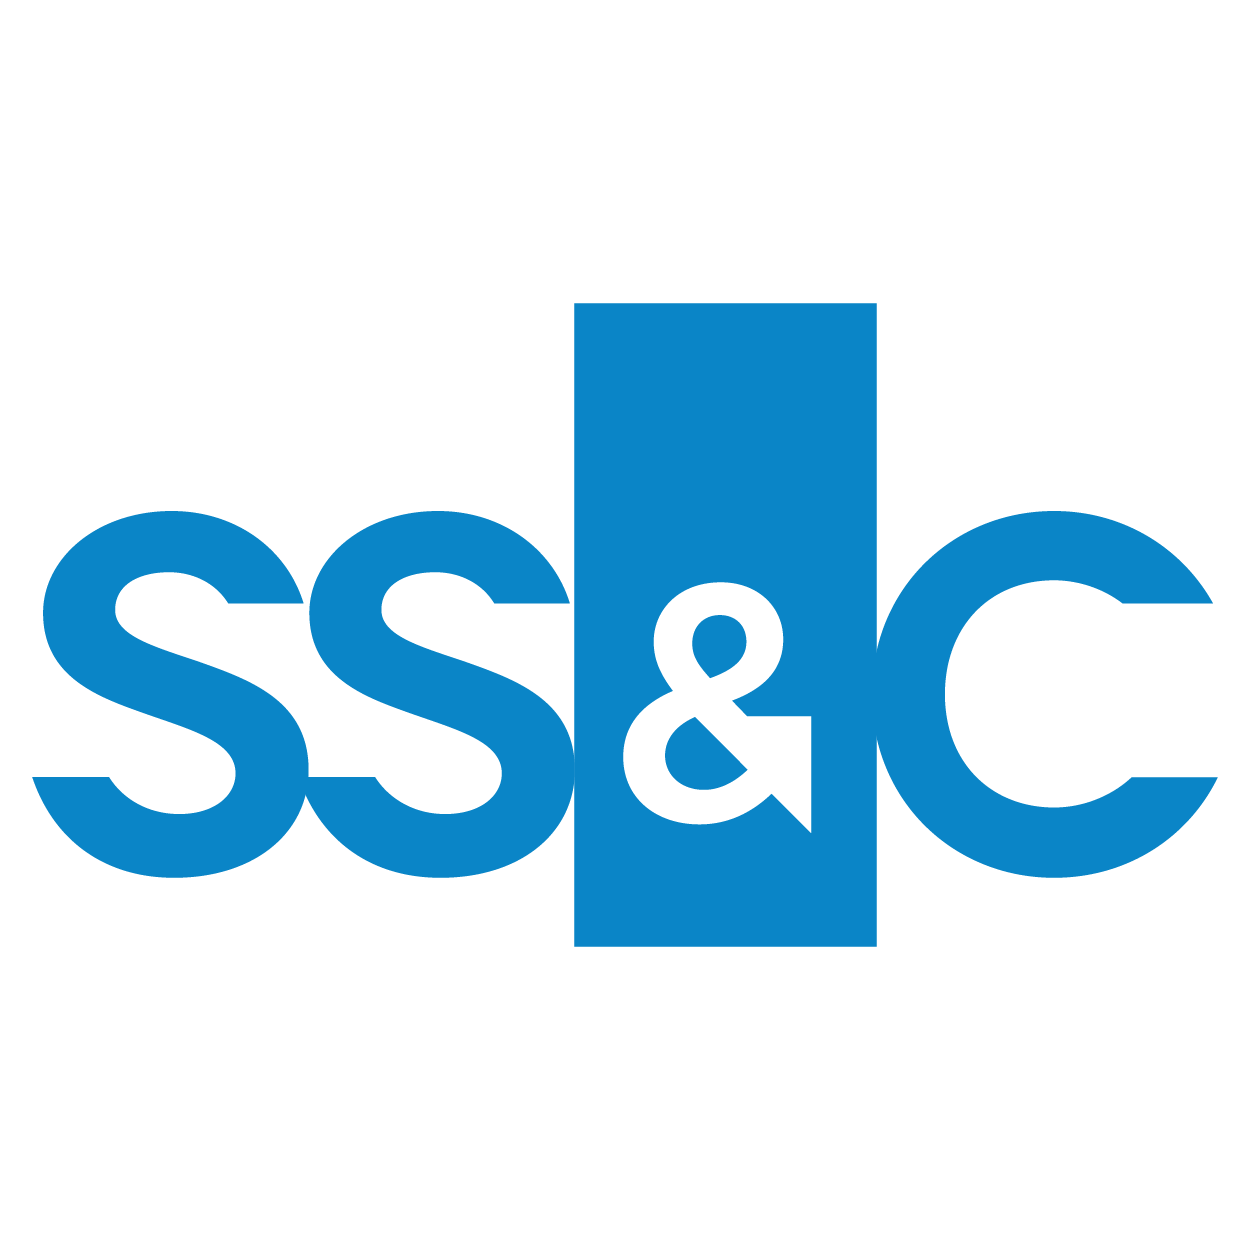 SS&C Technologies Logo png